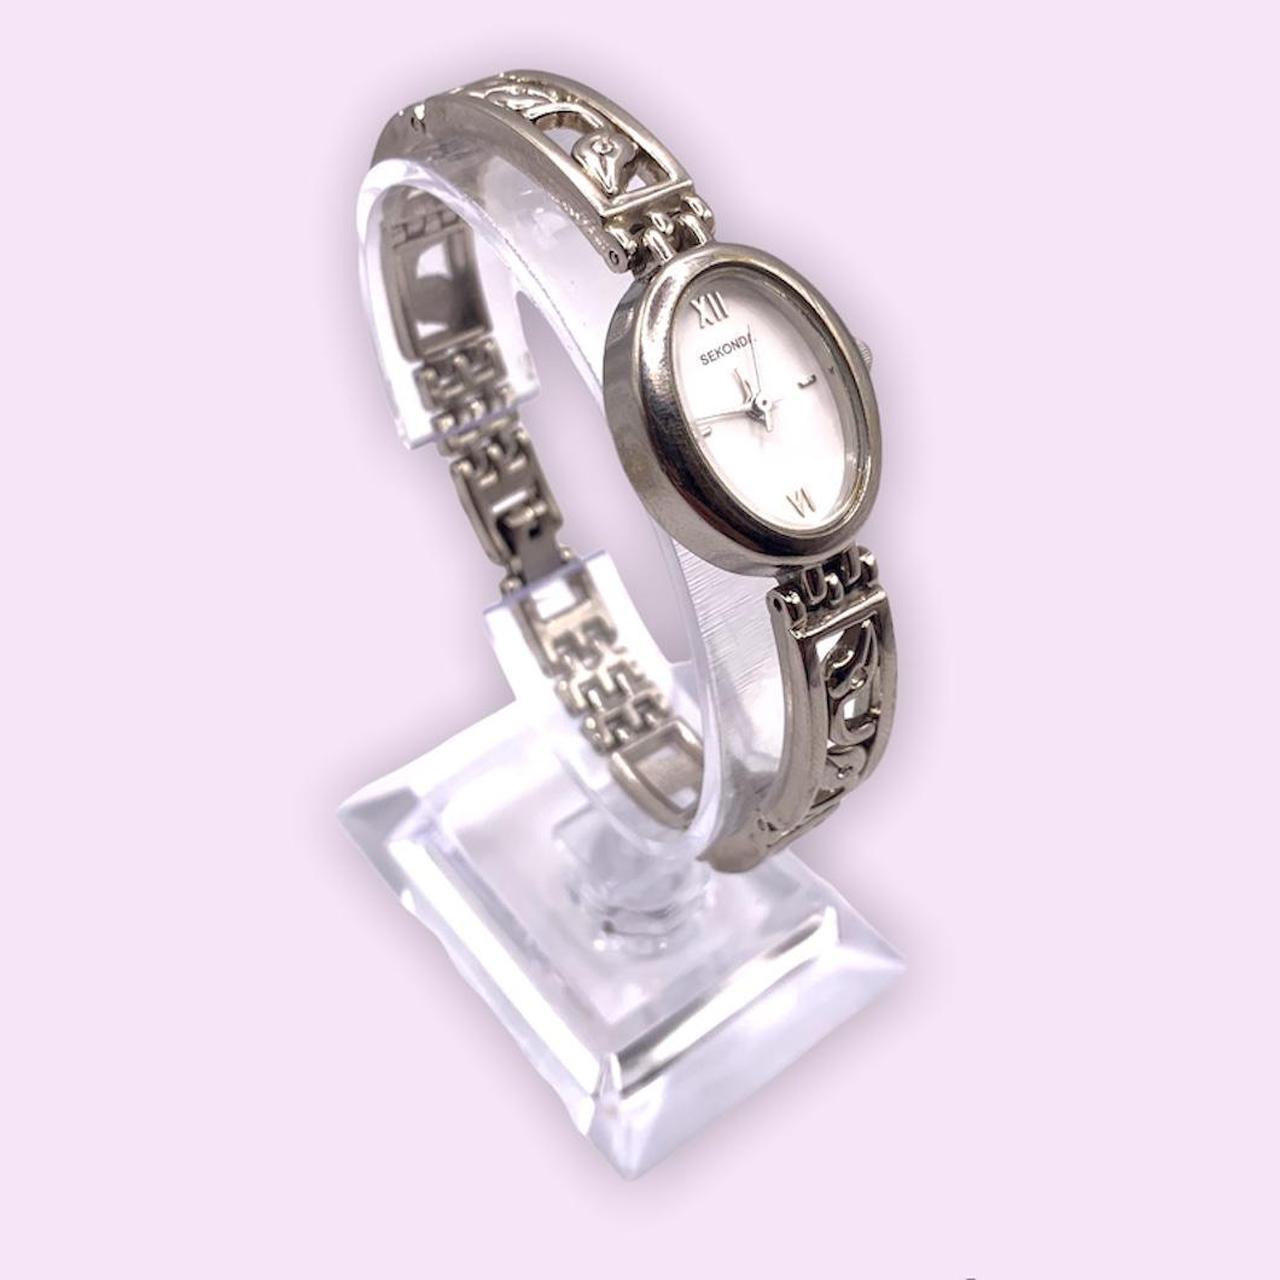 Renos White Dial Women's Analogue Watch- Silver : Amazon.in: Fashion